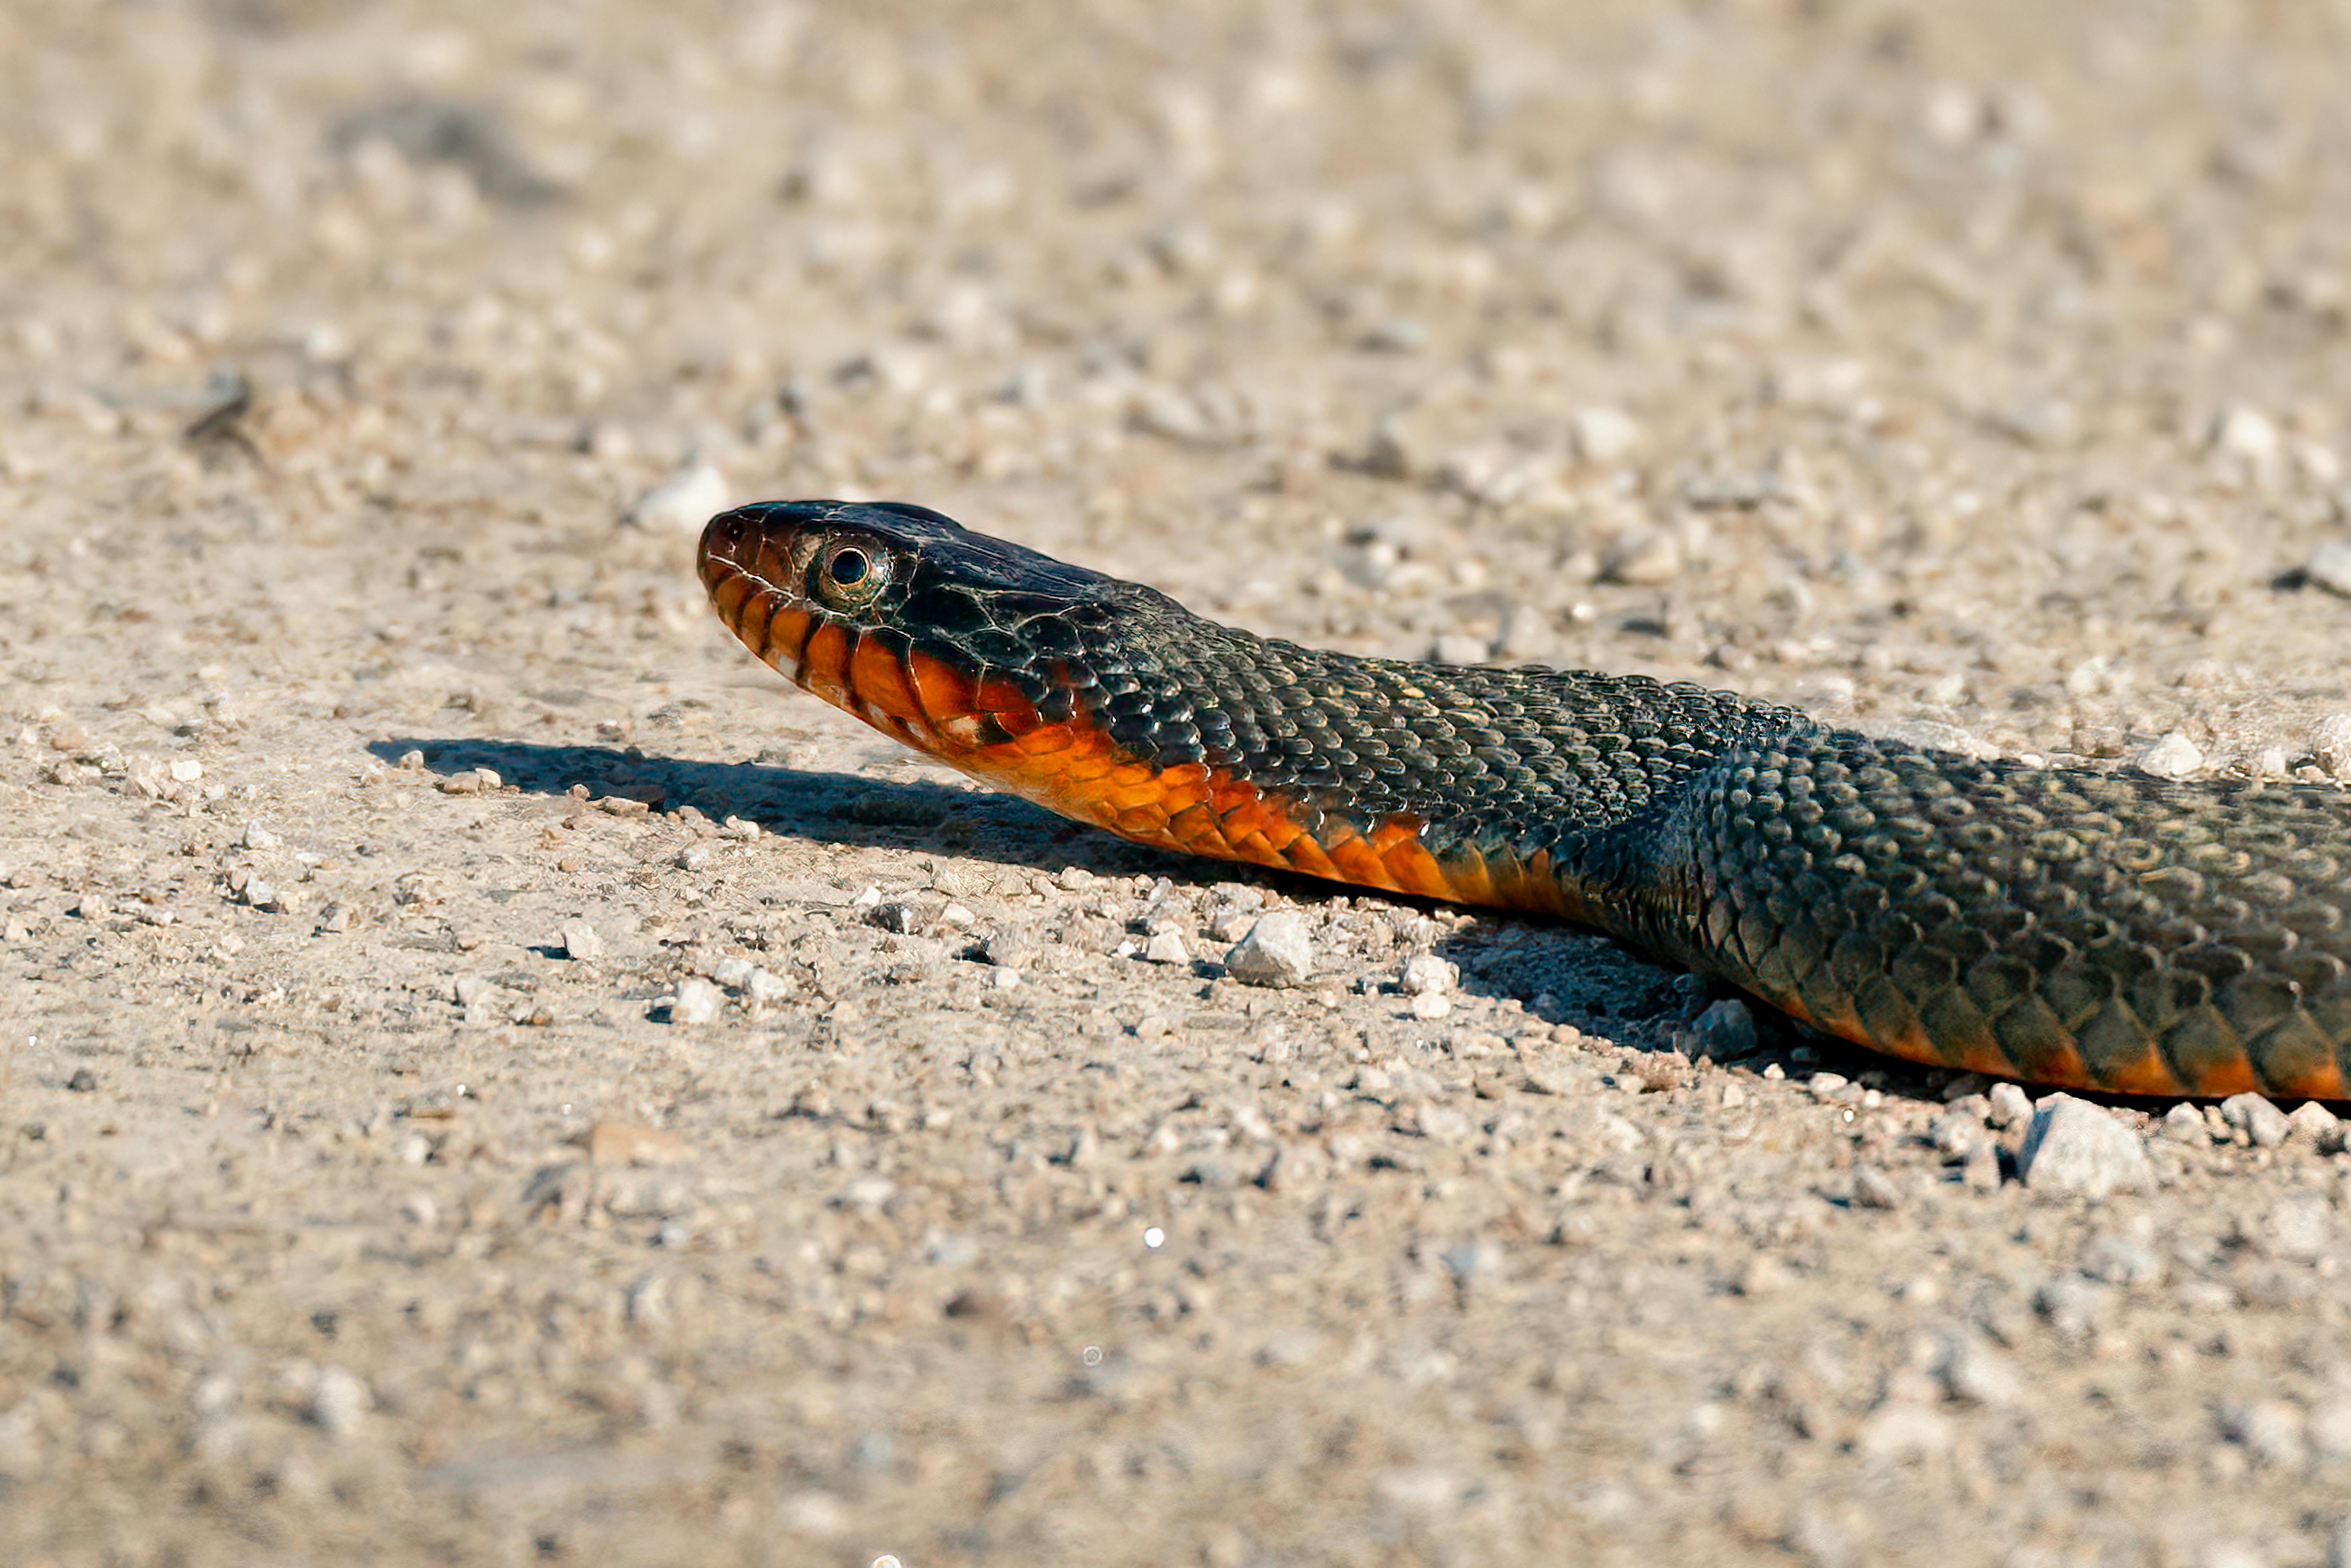 A red-bellied black snake | Source: Pexels